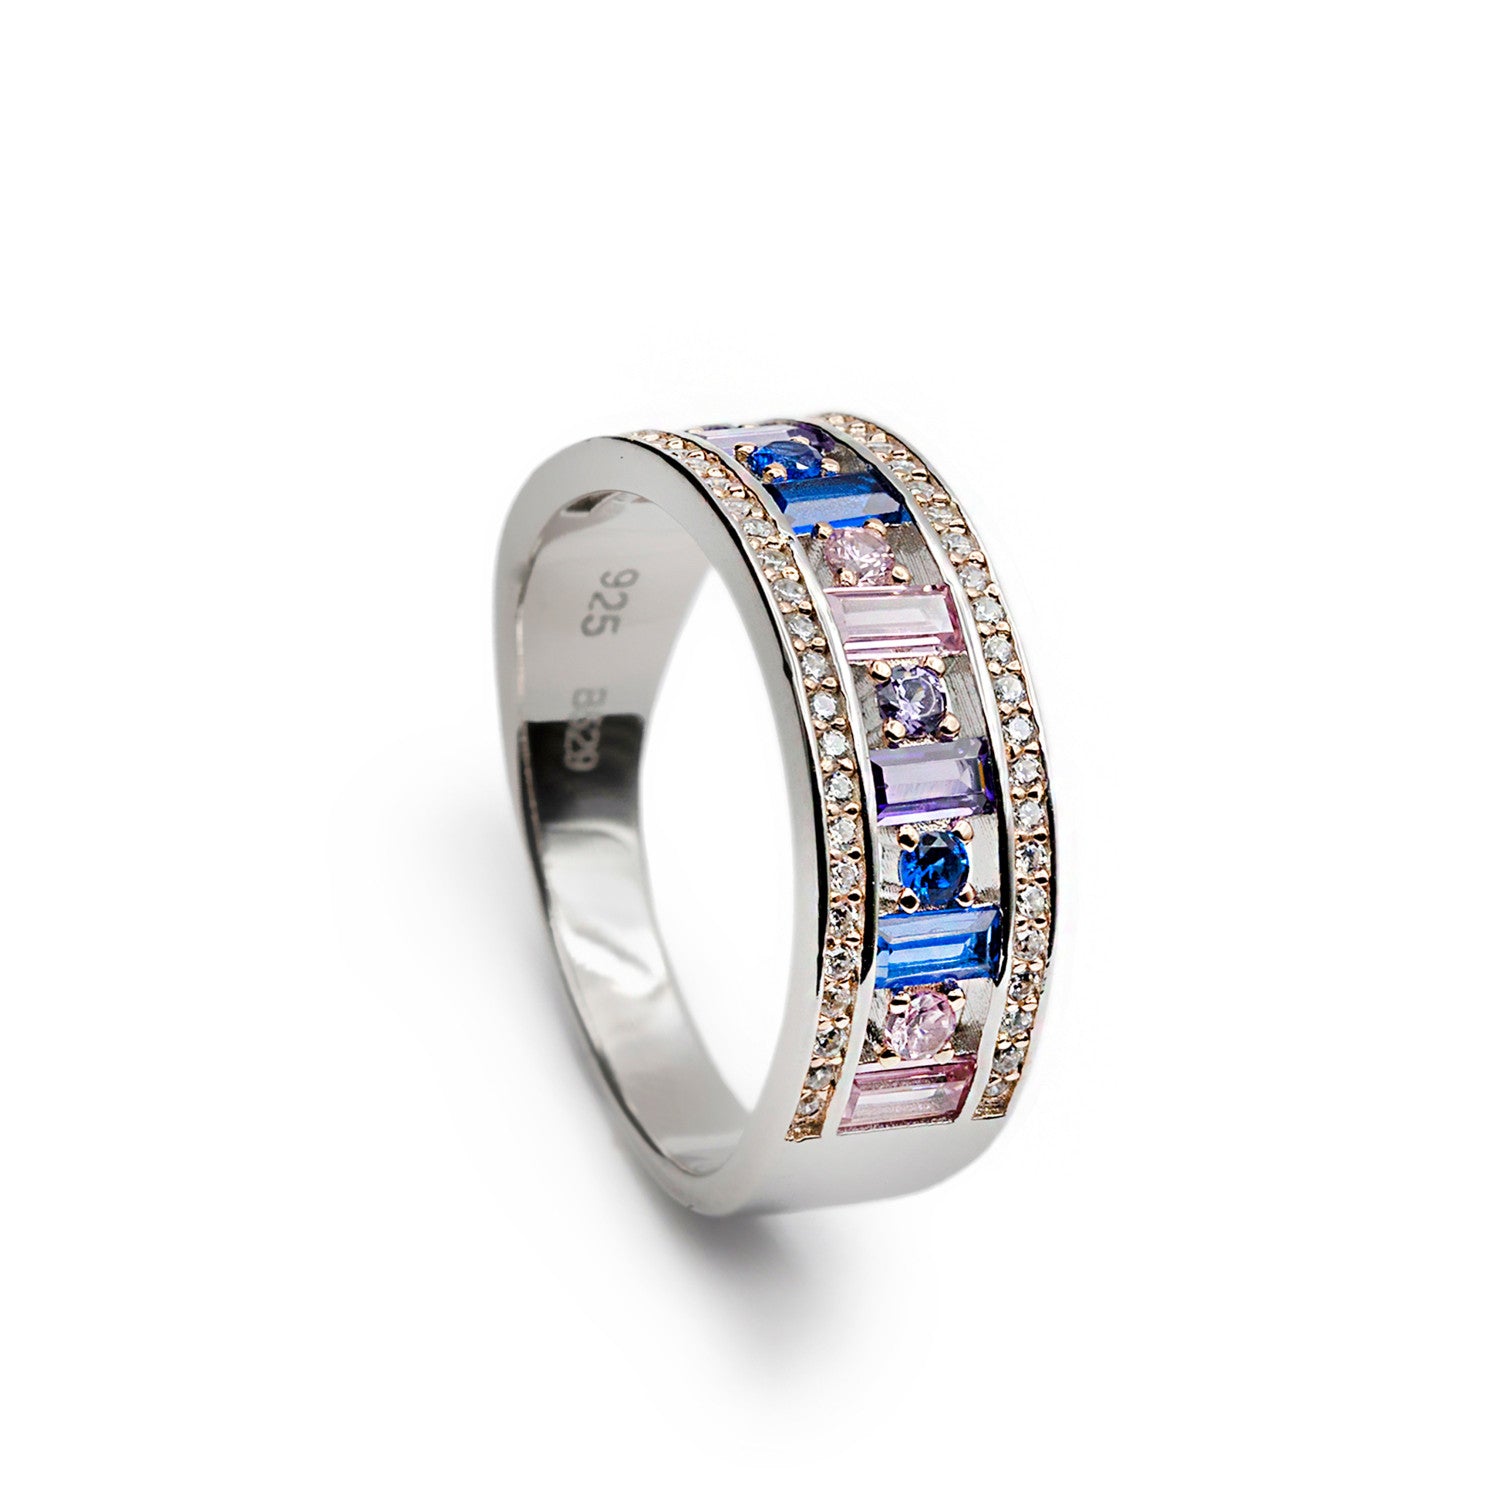 Rings with stones mutlicolor gemstones lane design